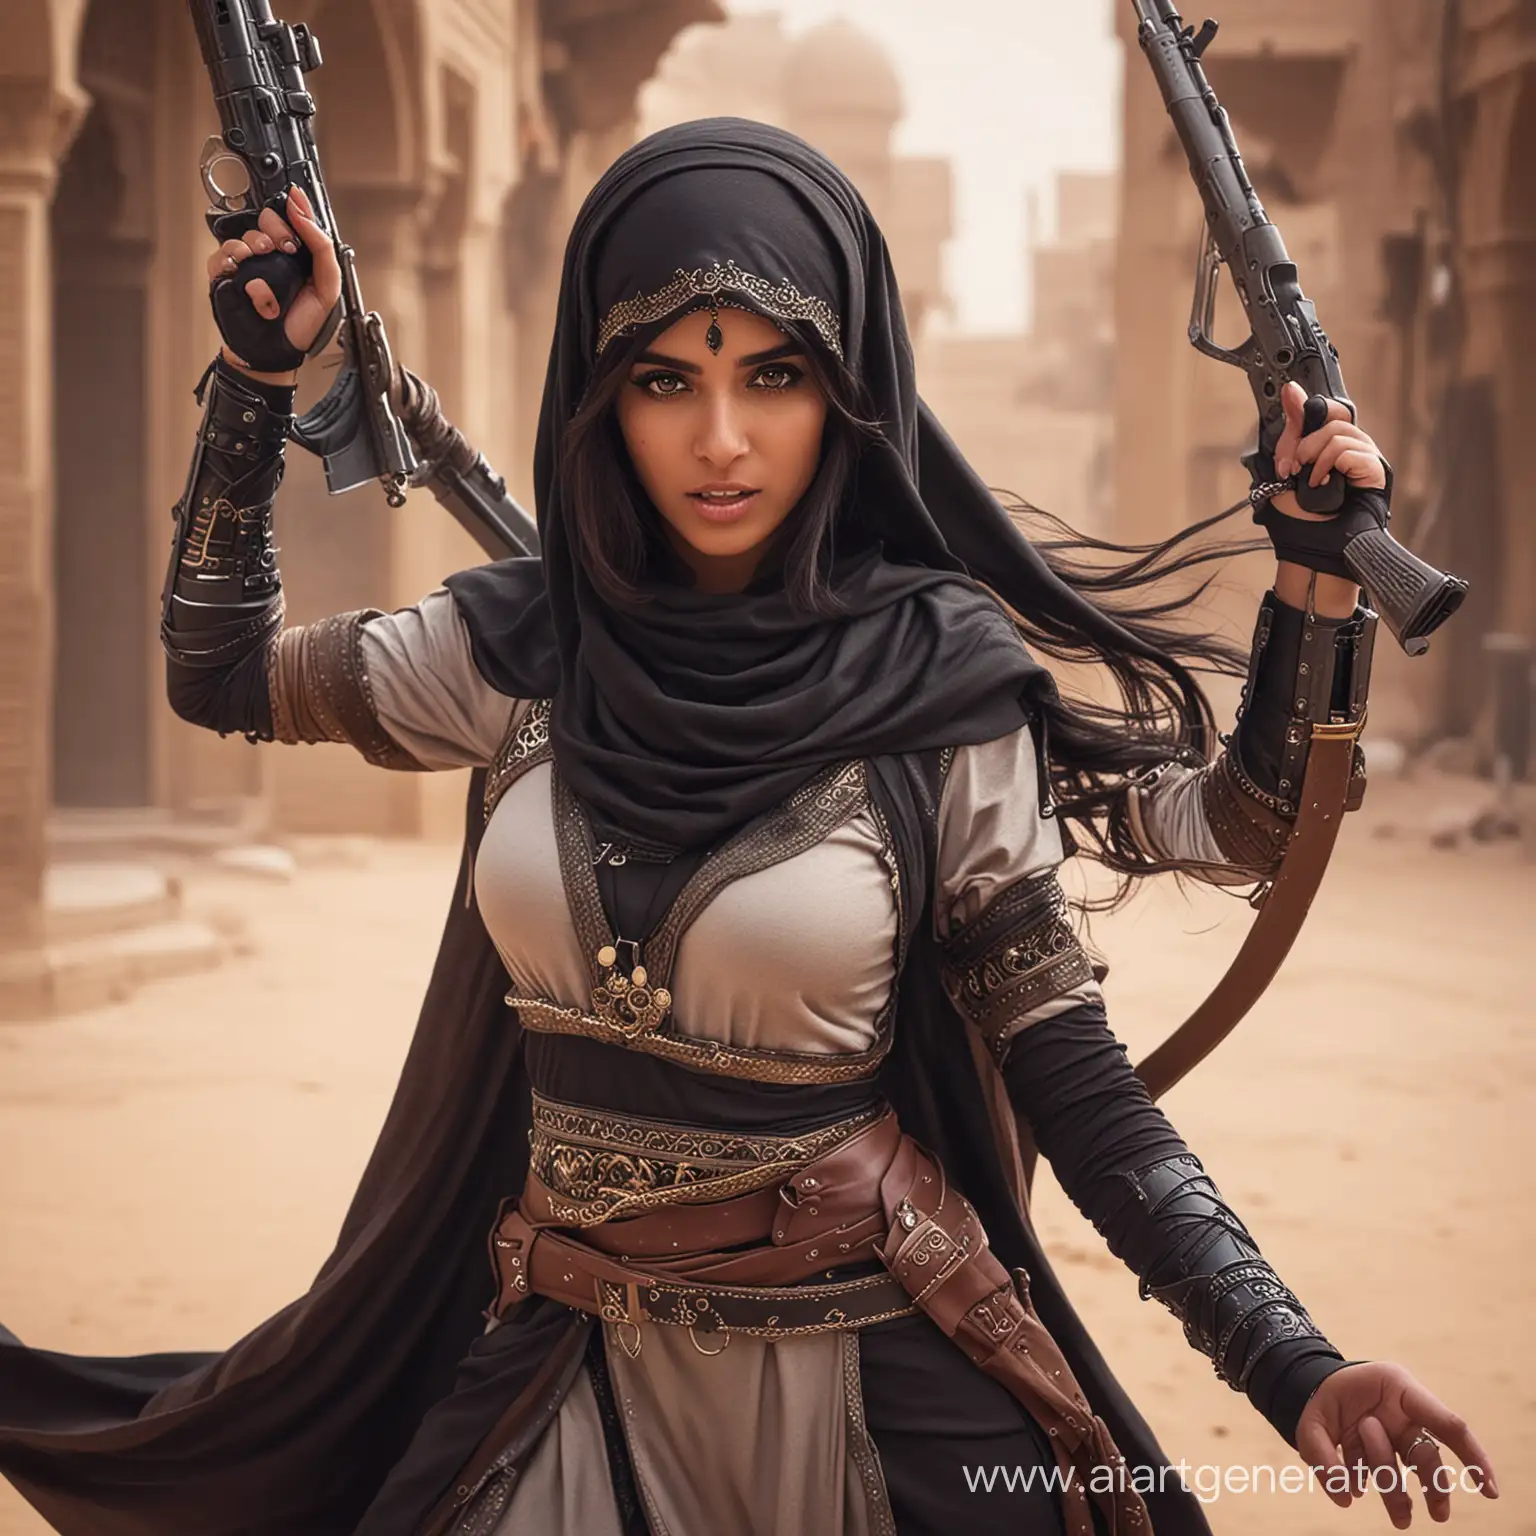 Stealthy-Arabian-Girl-Assassin-Amidst-Desert-Ruins